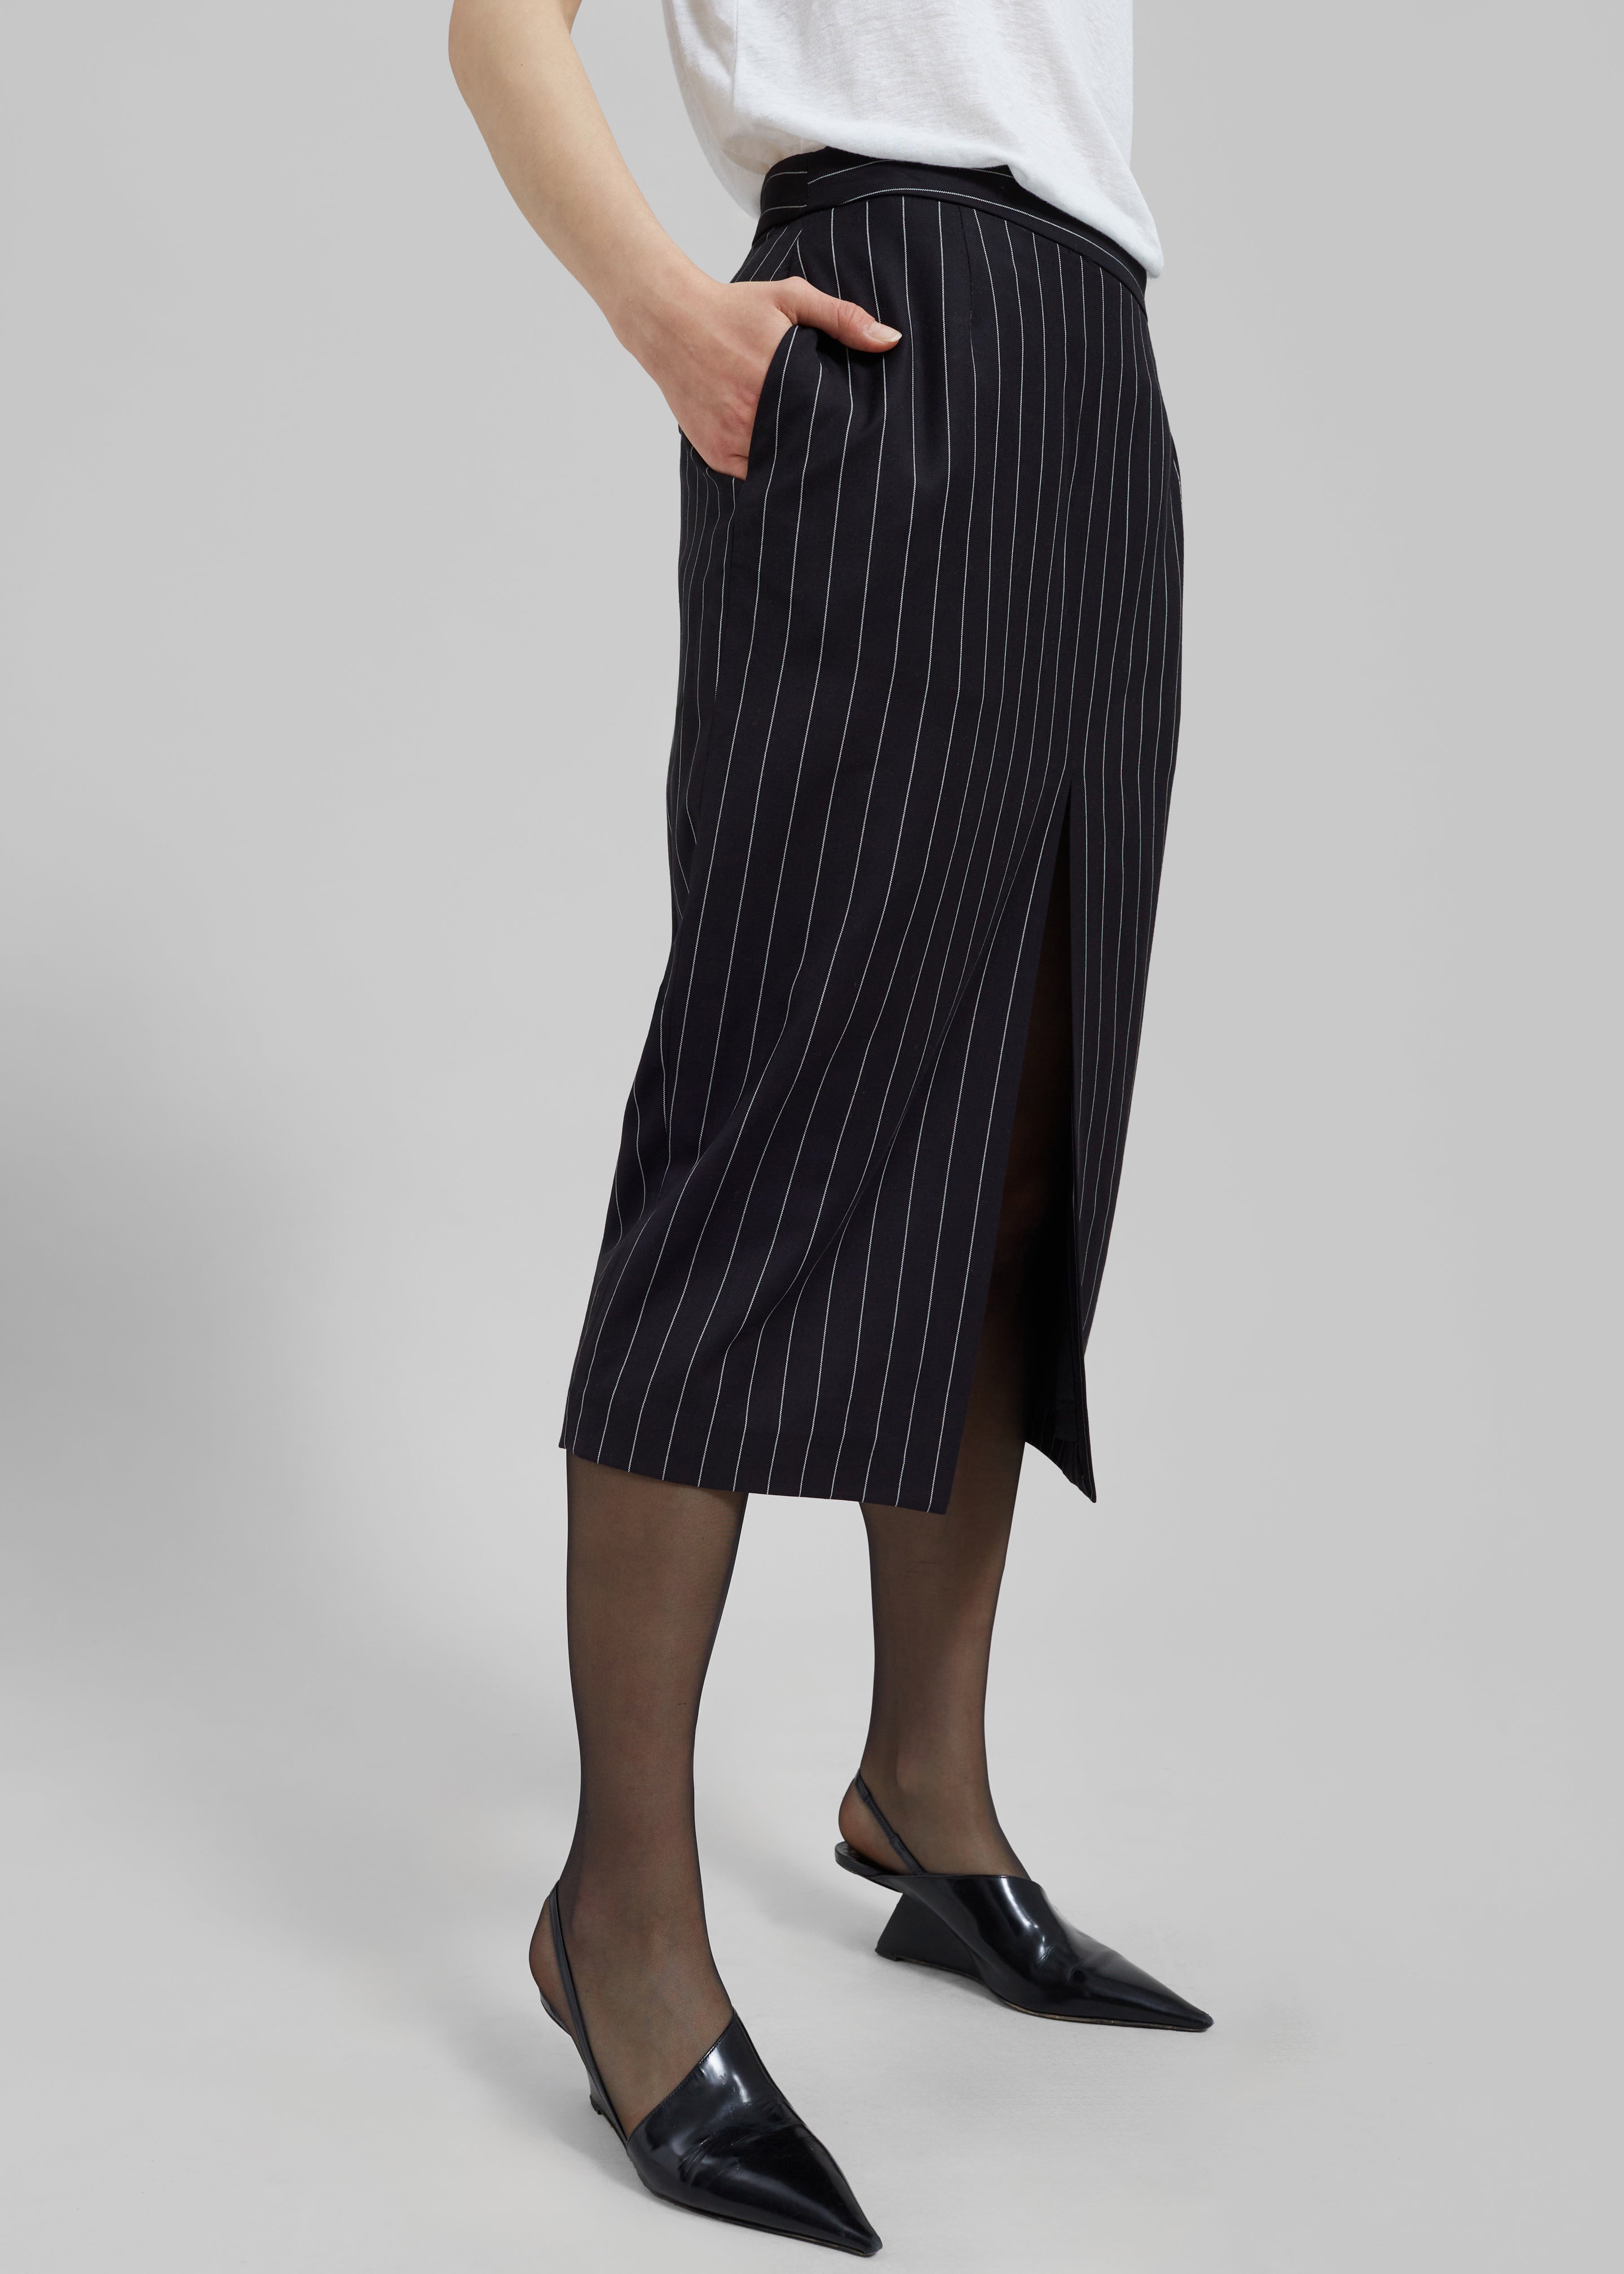 Holland Midi Slit Skirt - Black/White Pinstripe - 3